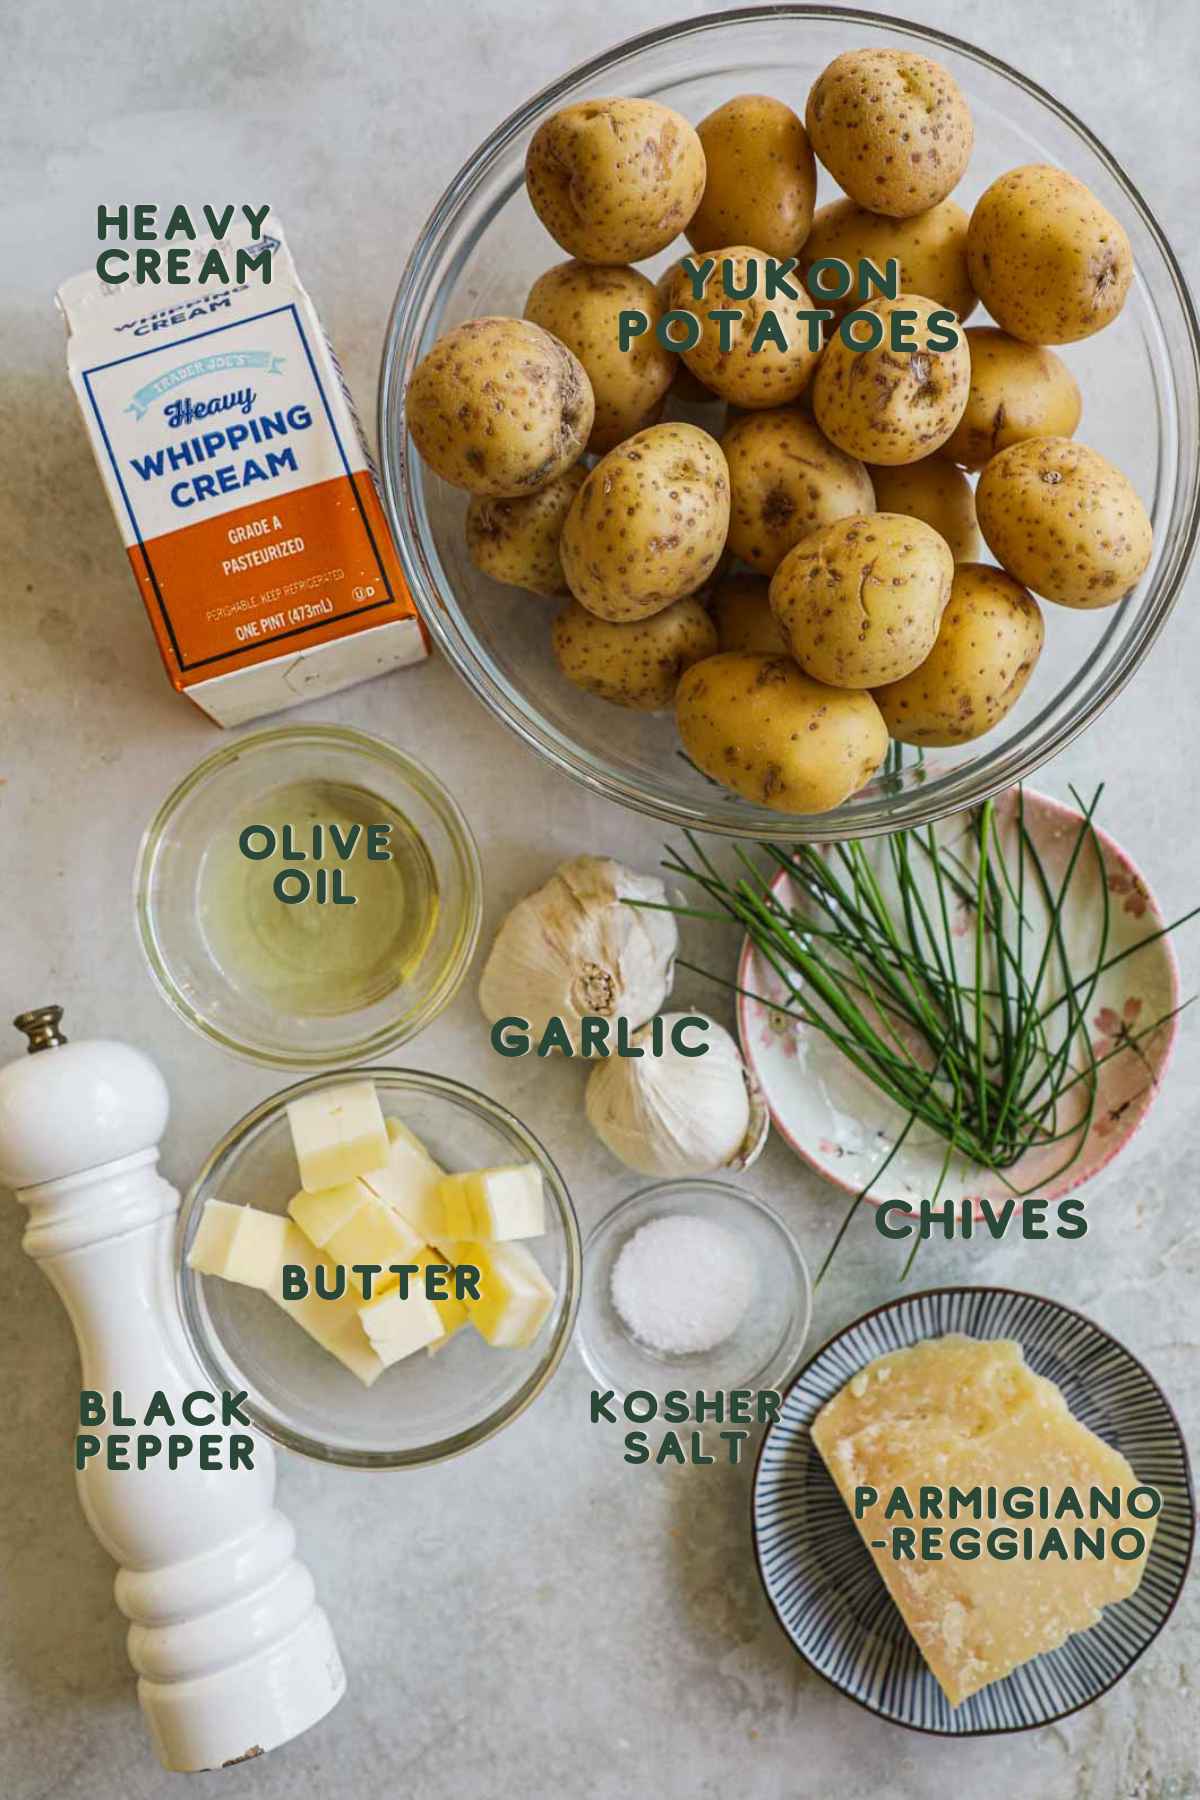 Ingredients to make roasted garlic mashed potatoes, yukon potatoes, heavy cream, olive oil, garlic, chives, butter, parmigiano-reggiano, pepper, kosher salt.